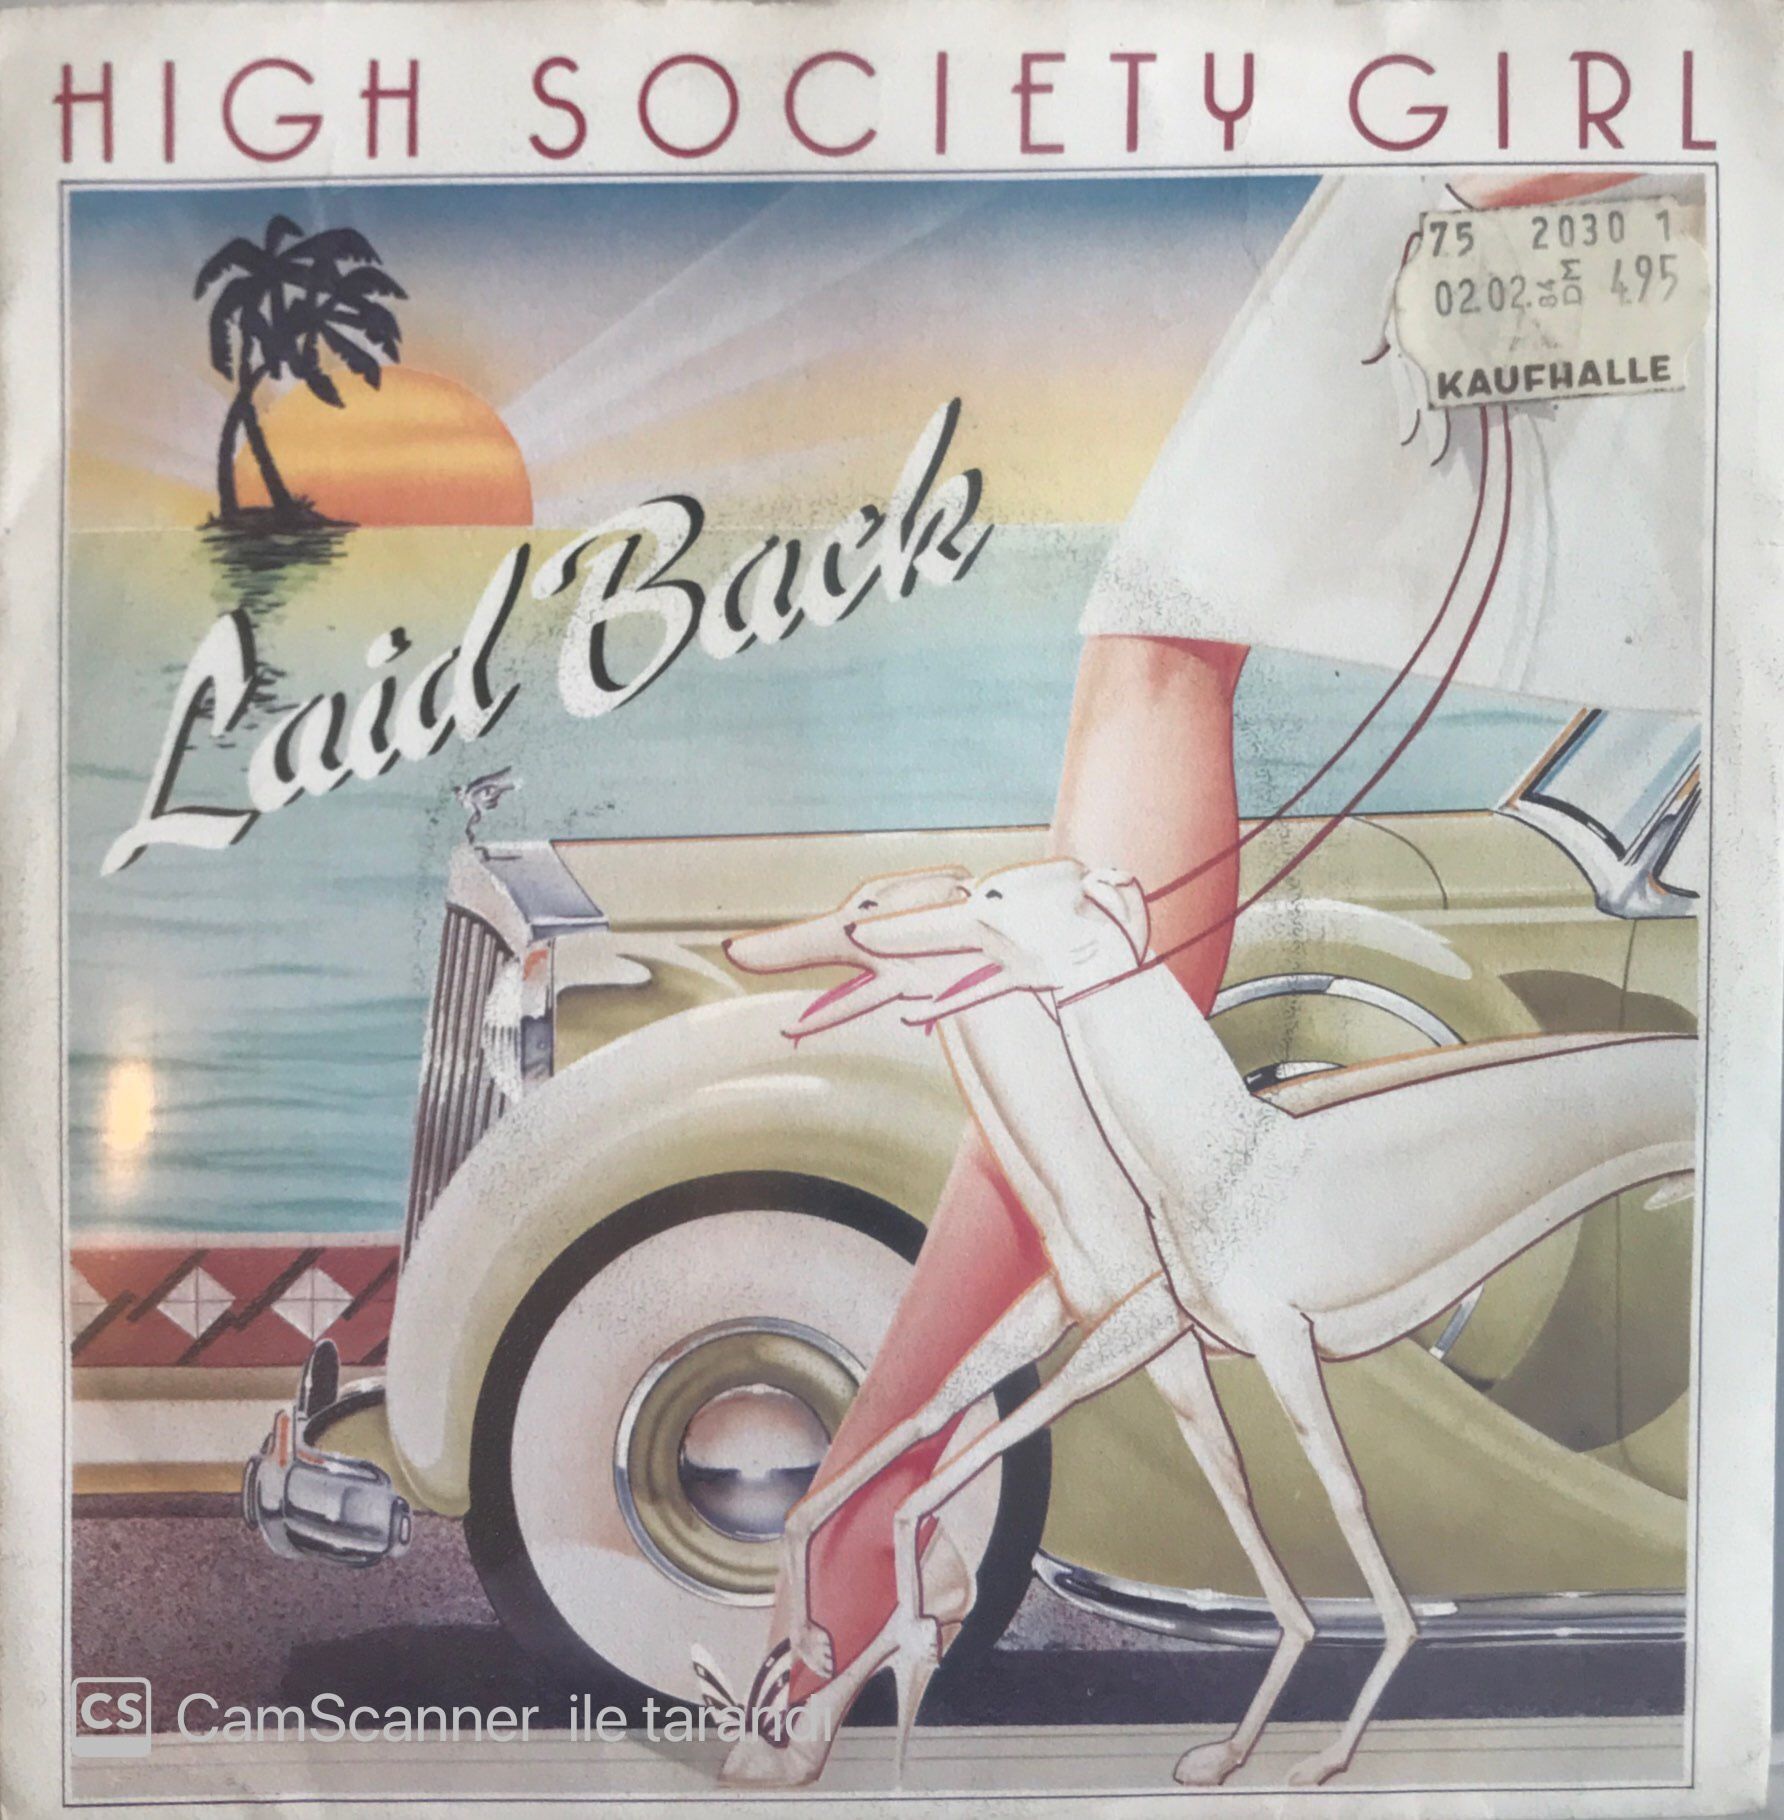 Laid Back - High Society Girl 45lik